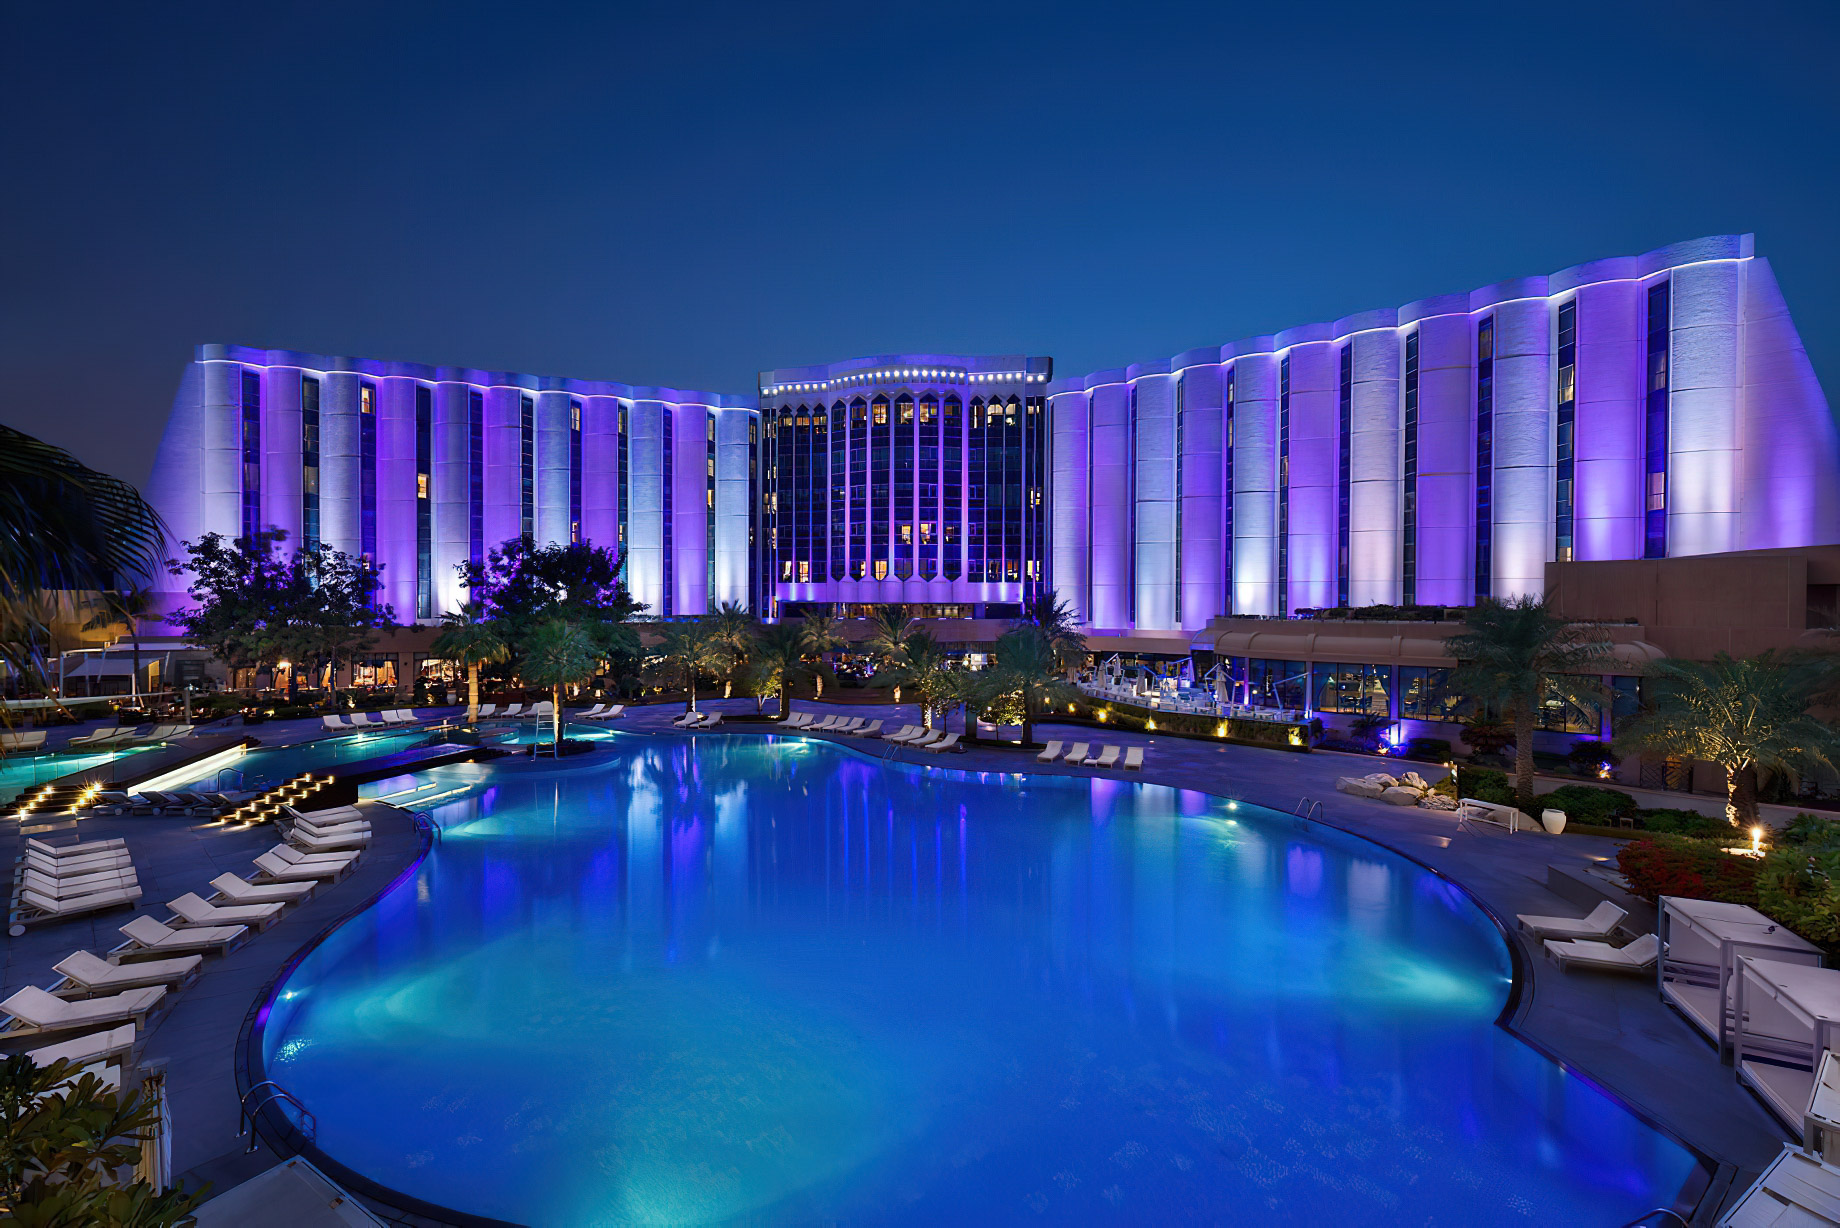 The Ritz-Carlton, Bahrain Resort Hotel – Manama, Bahrain – Hotel Exterior Pool Night View